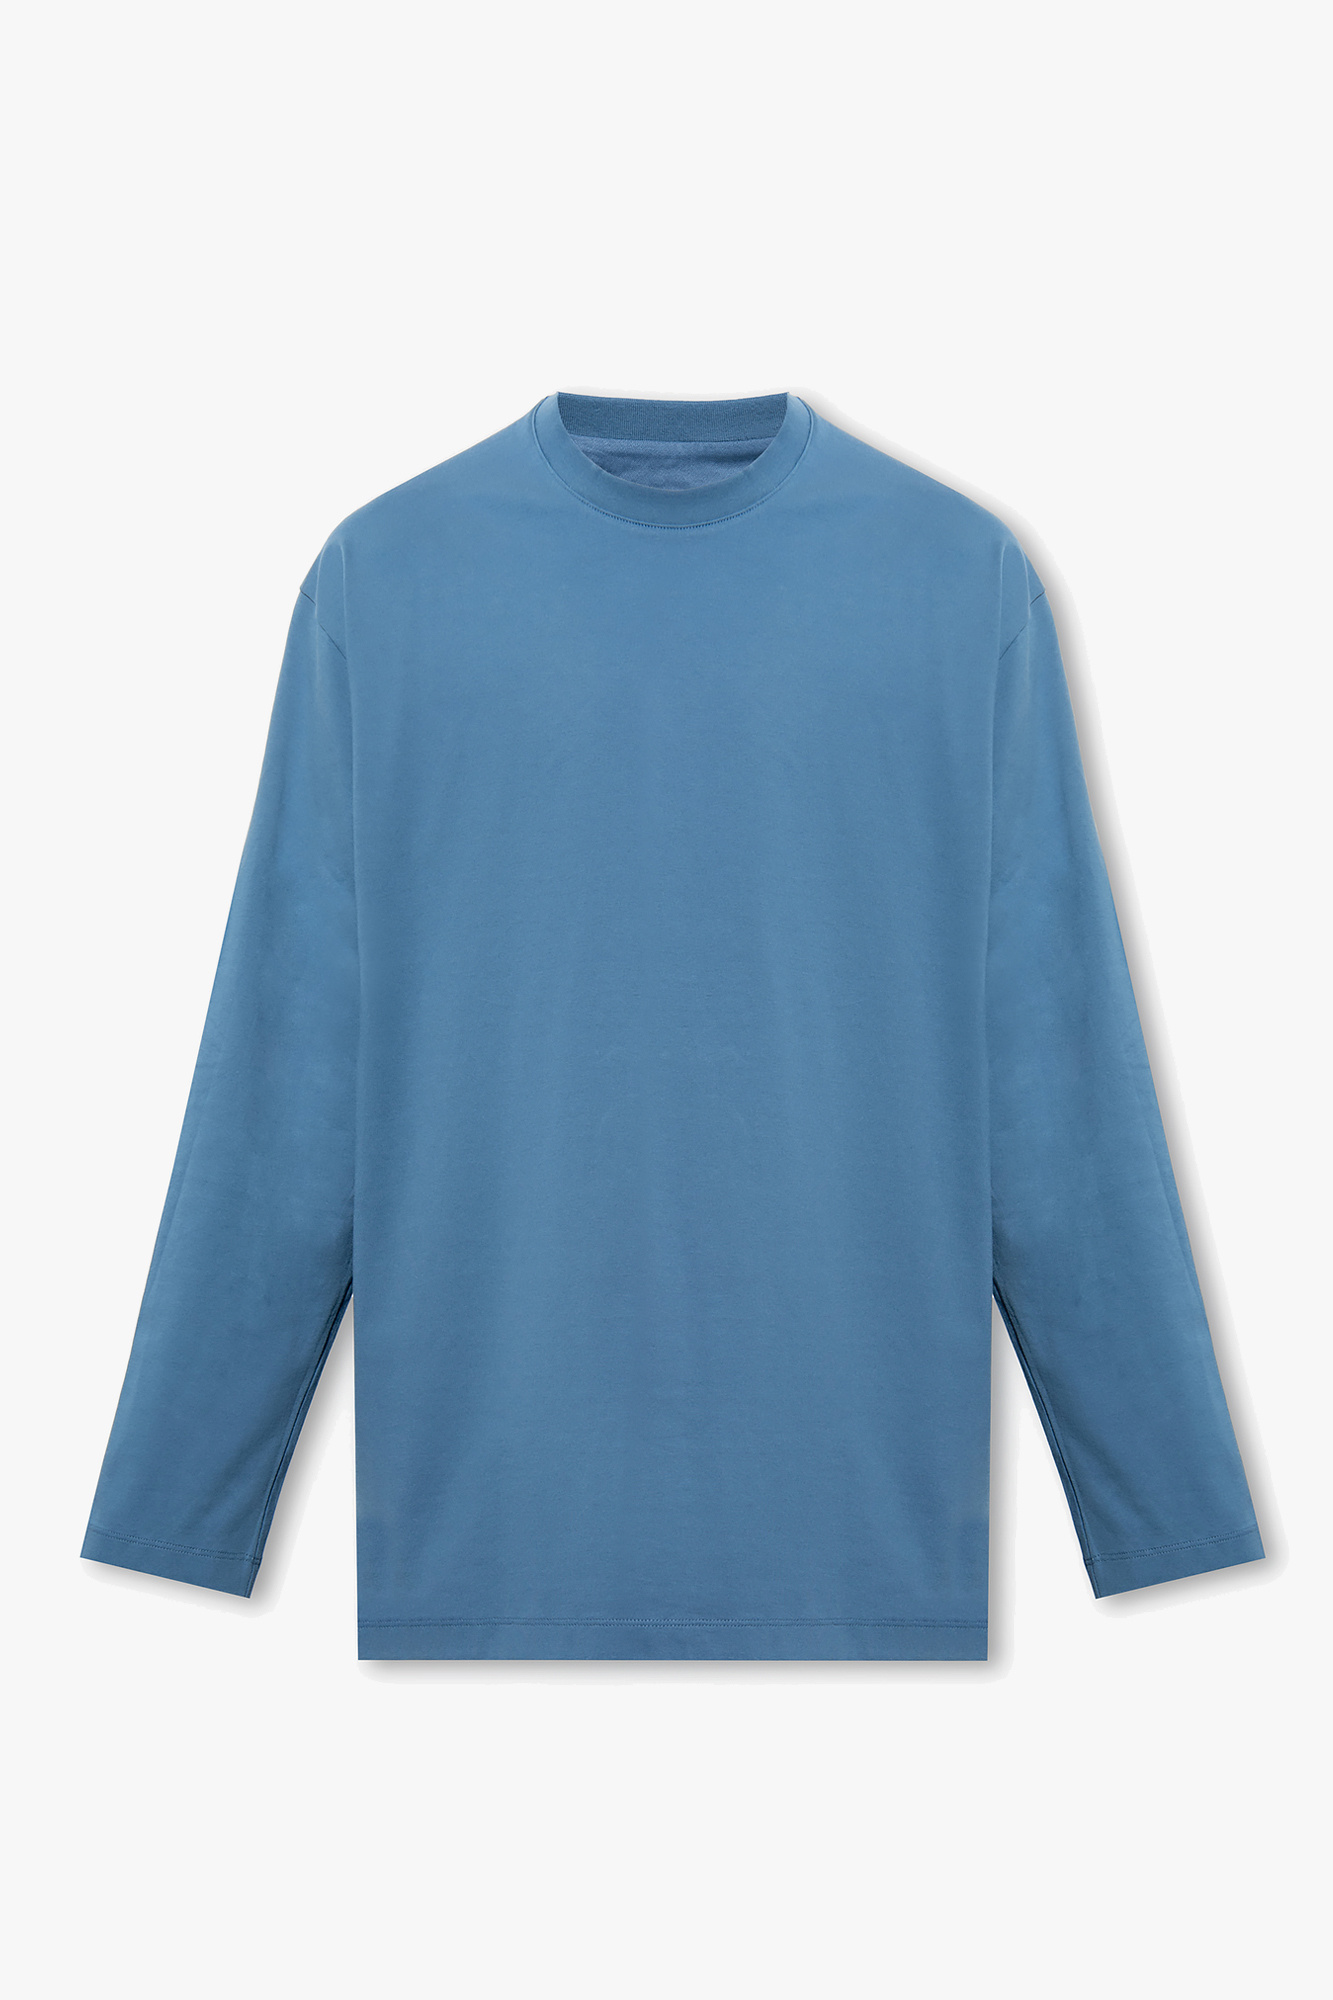 Blue Long-sleeved T-shirt Y-3 Yohji Yamamoto - Vitkac GB